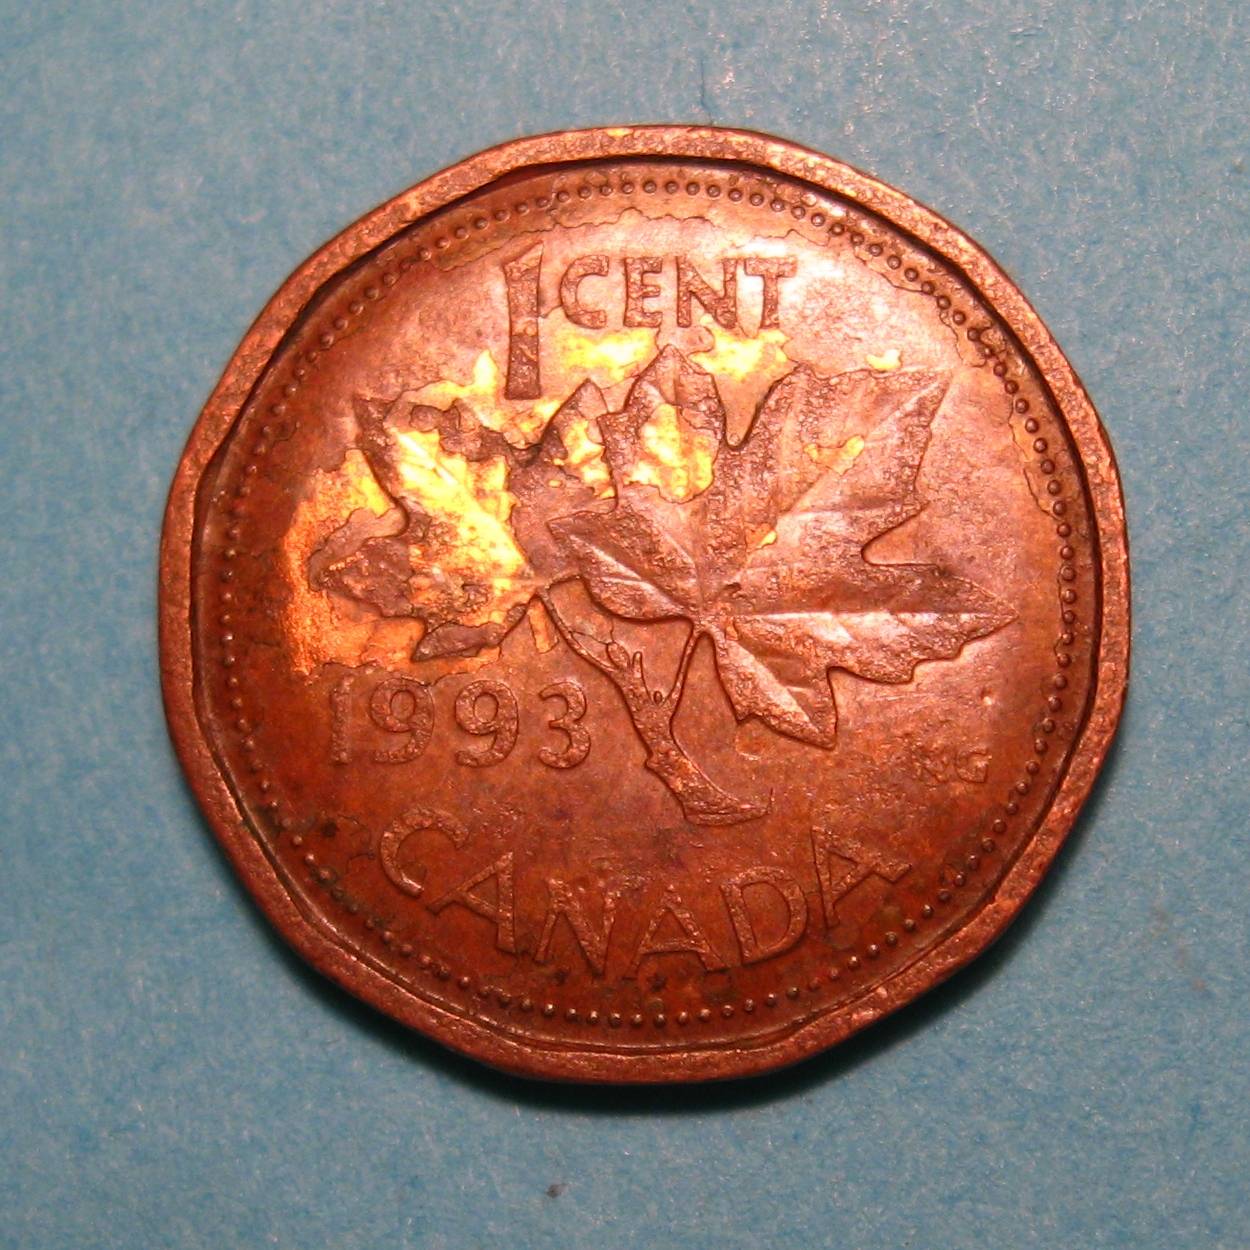 1-cent-1993-can-e38-revers.jpg